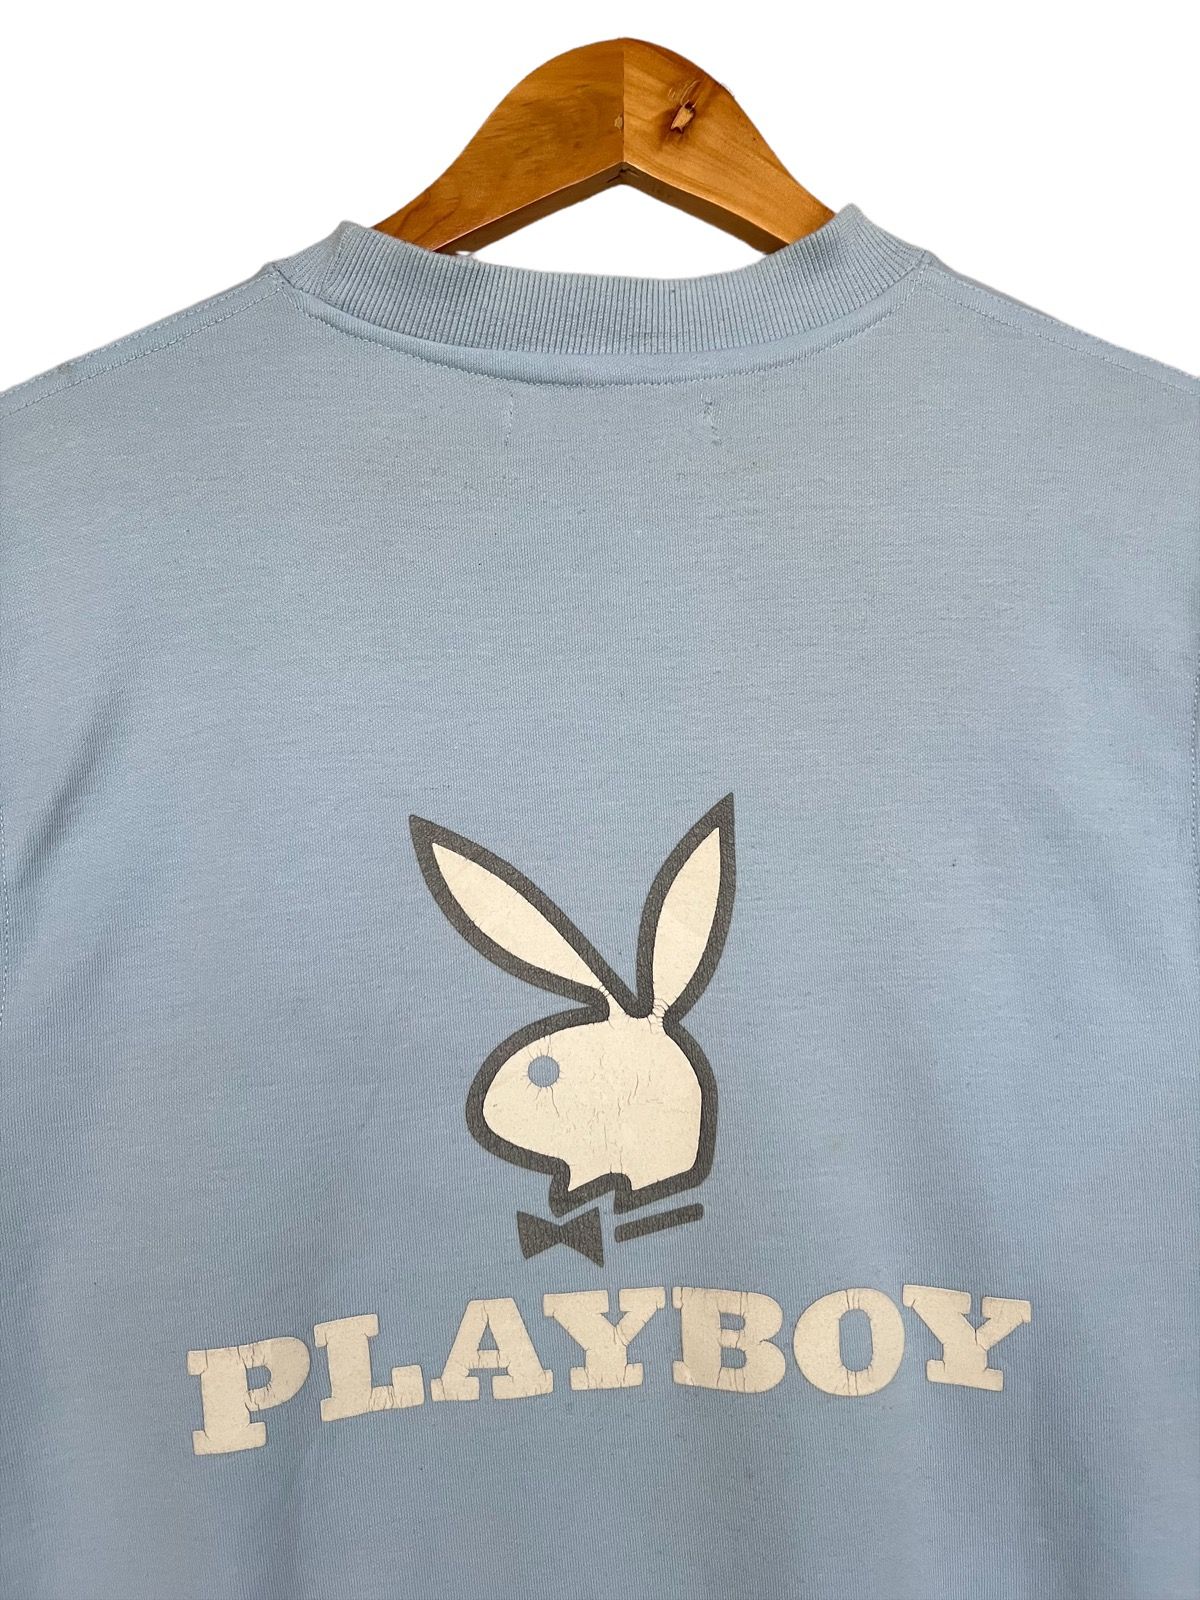 Vintage Playboy Sweatshirt Baby Blue Sweatshirt - 5